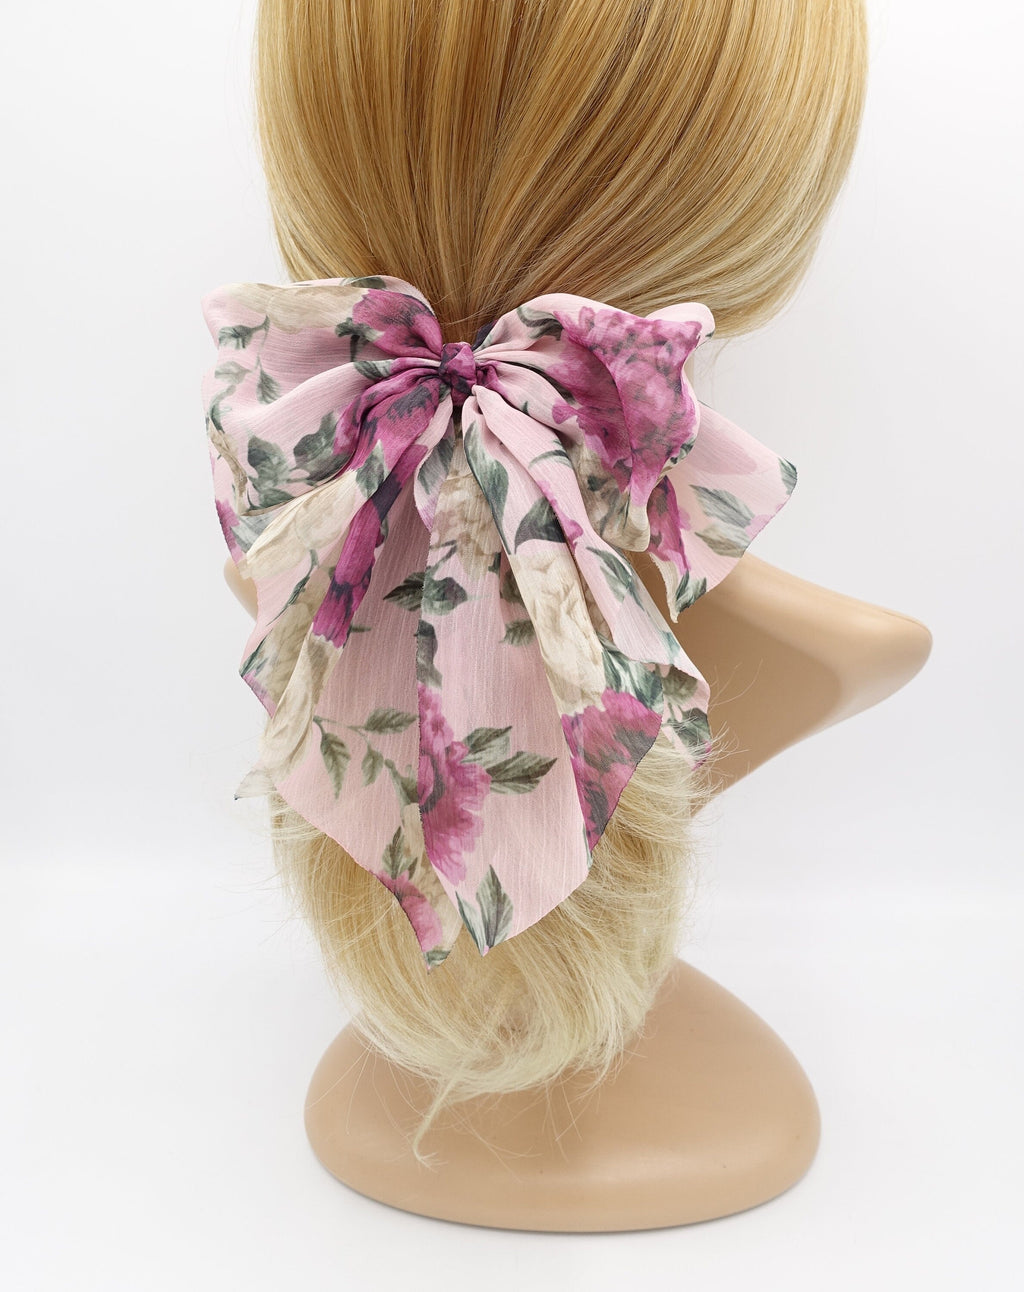 veryshine.com Barrette (Bow) Pink big floral chiffon hair bow feminine hair accessory